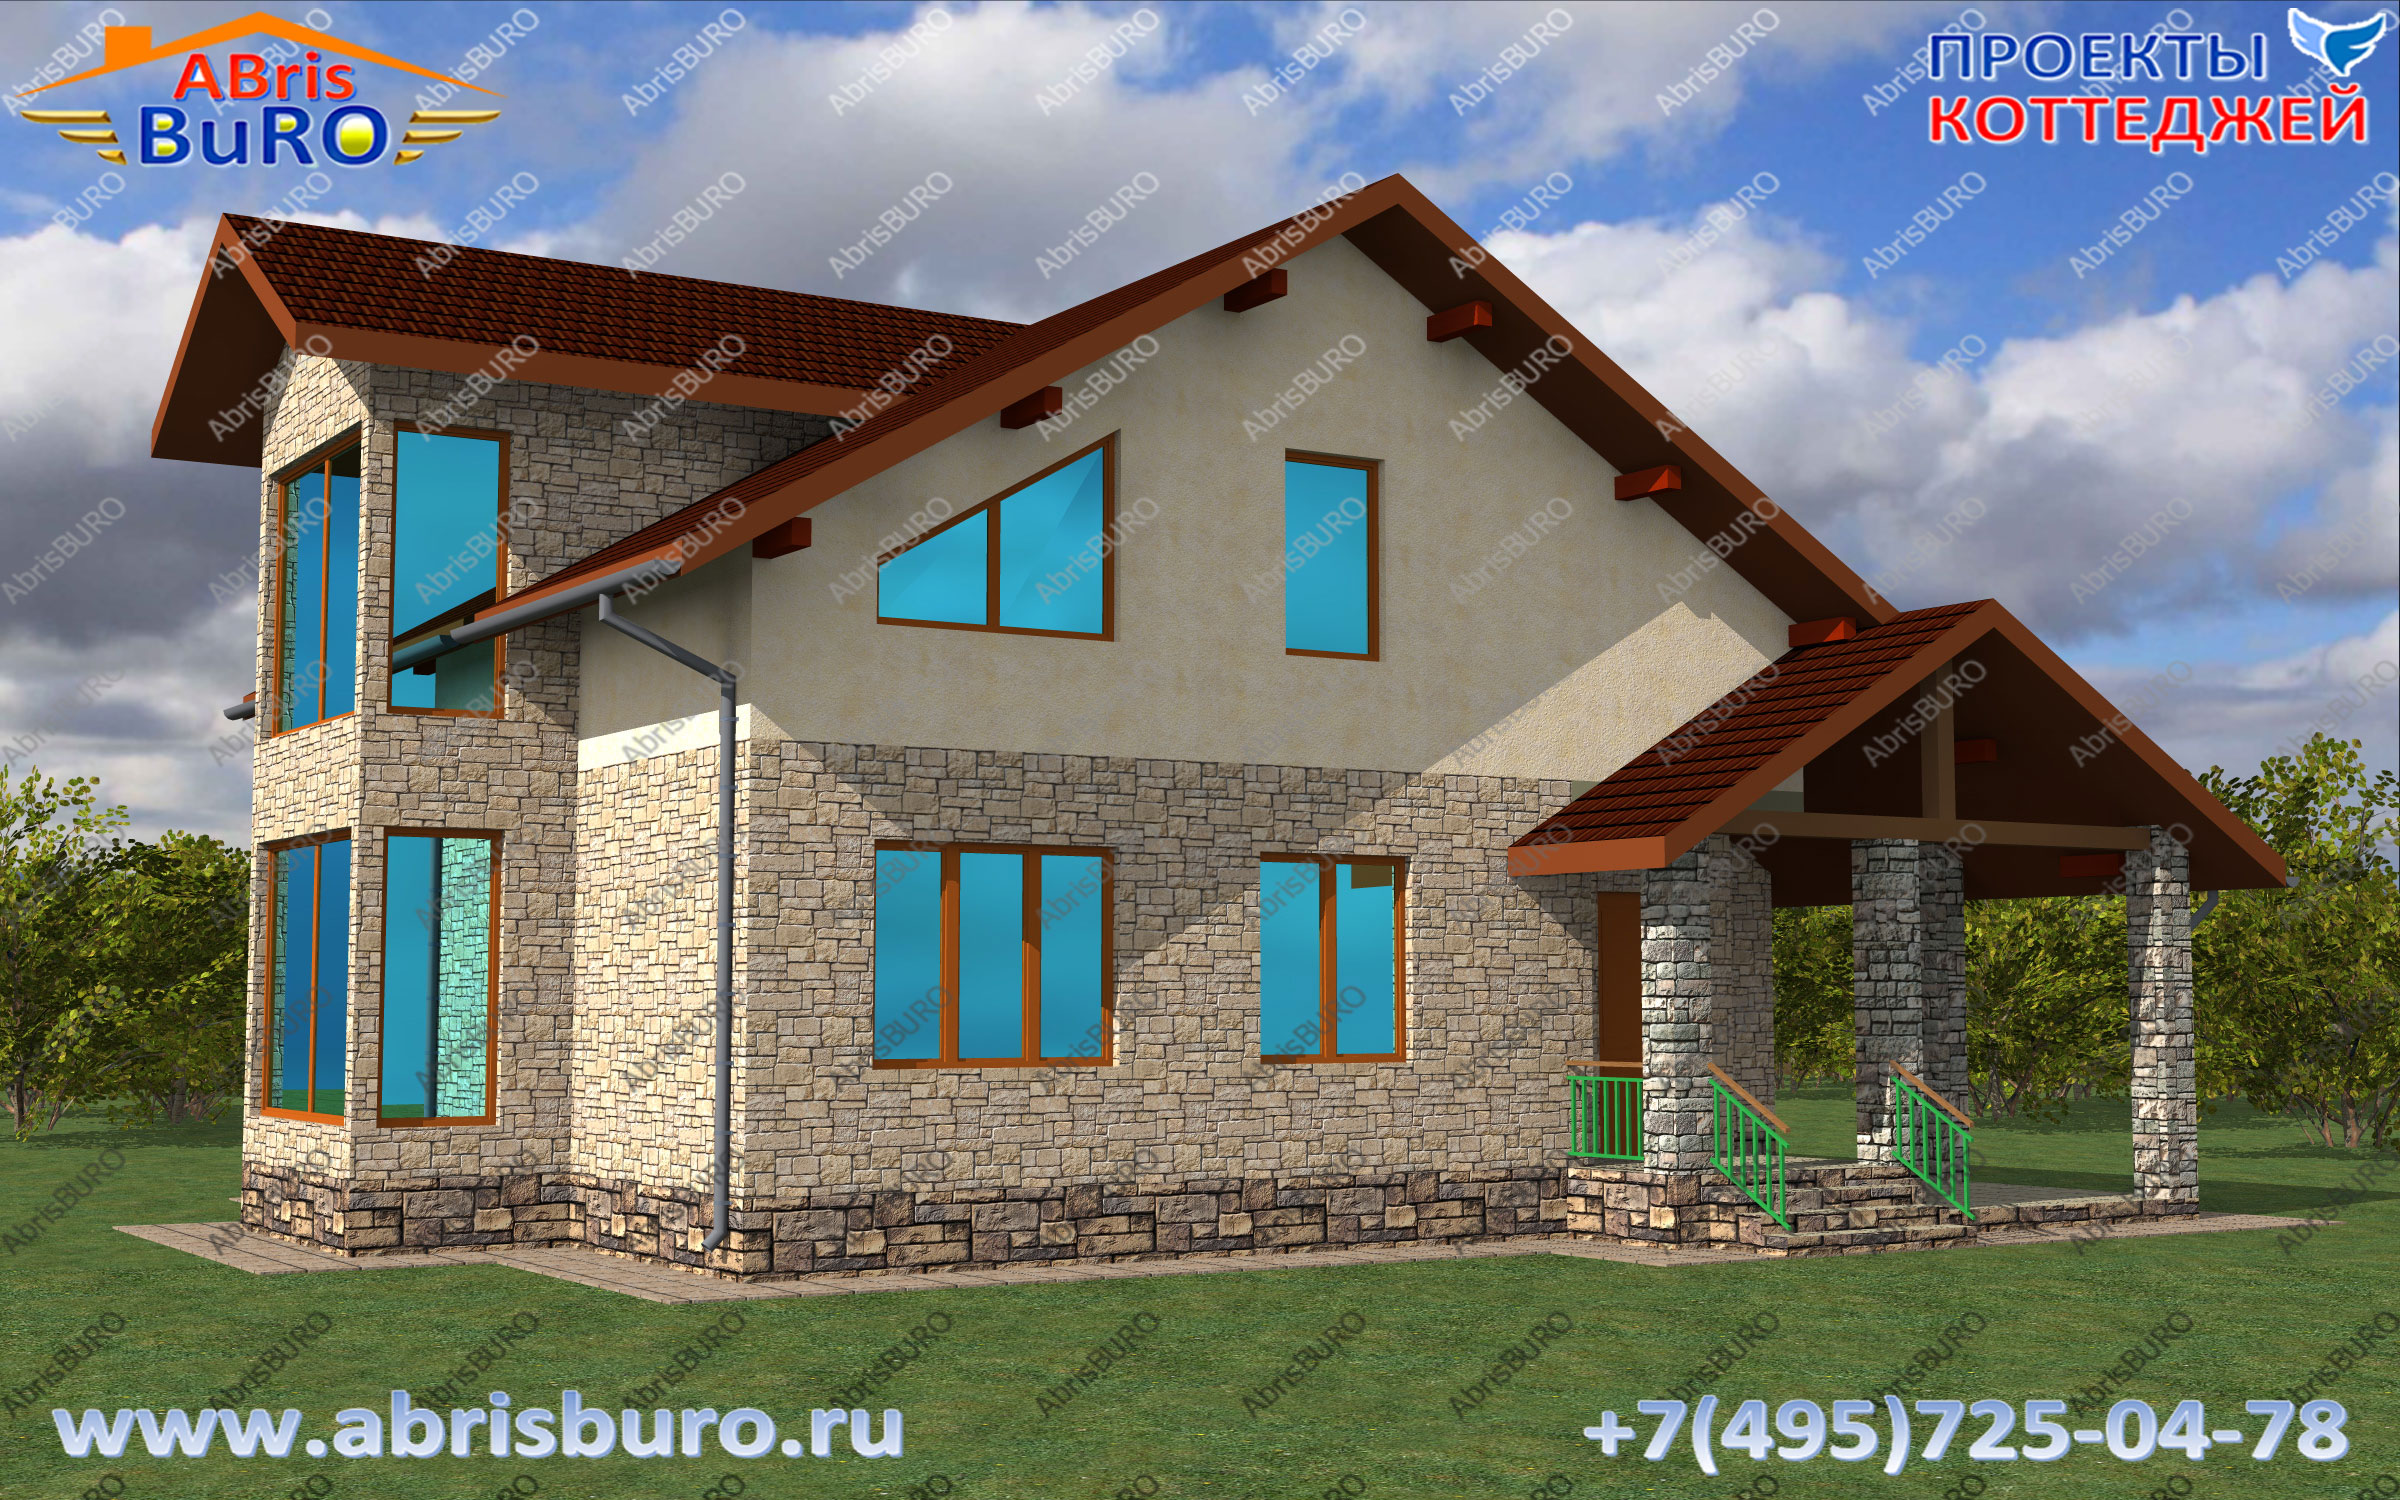 K2128-202 Проект дома с эркером и панорамным остеклением на сайте www.abrisburo.ru